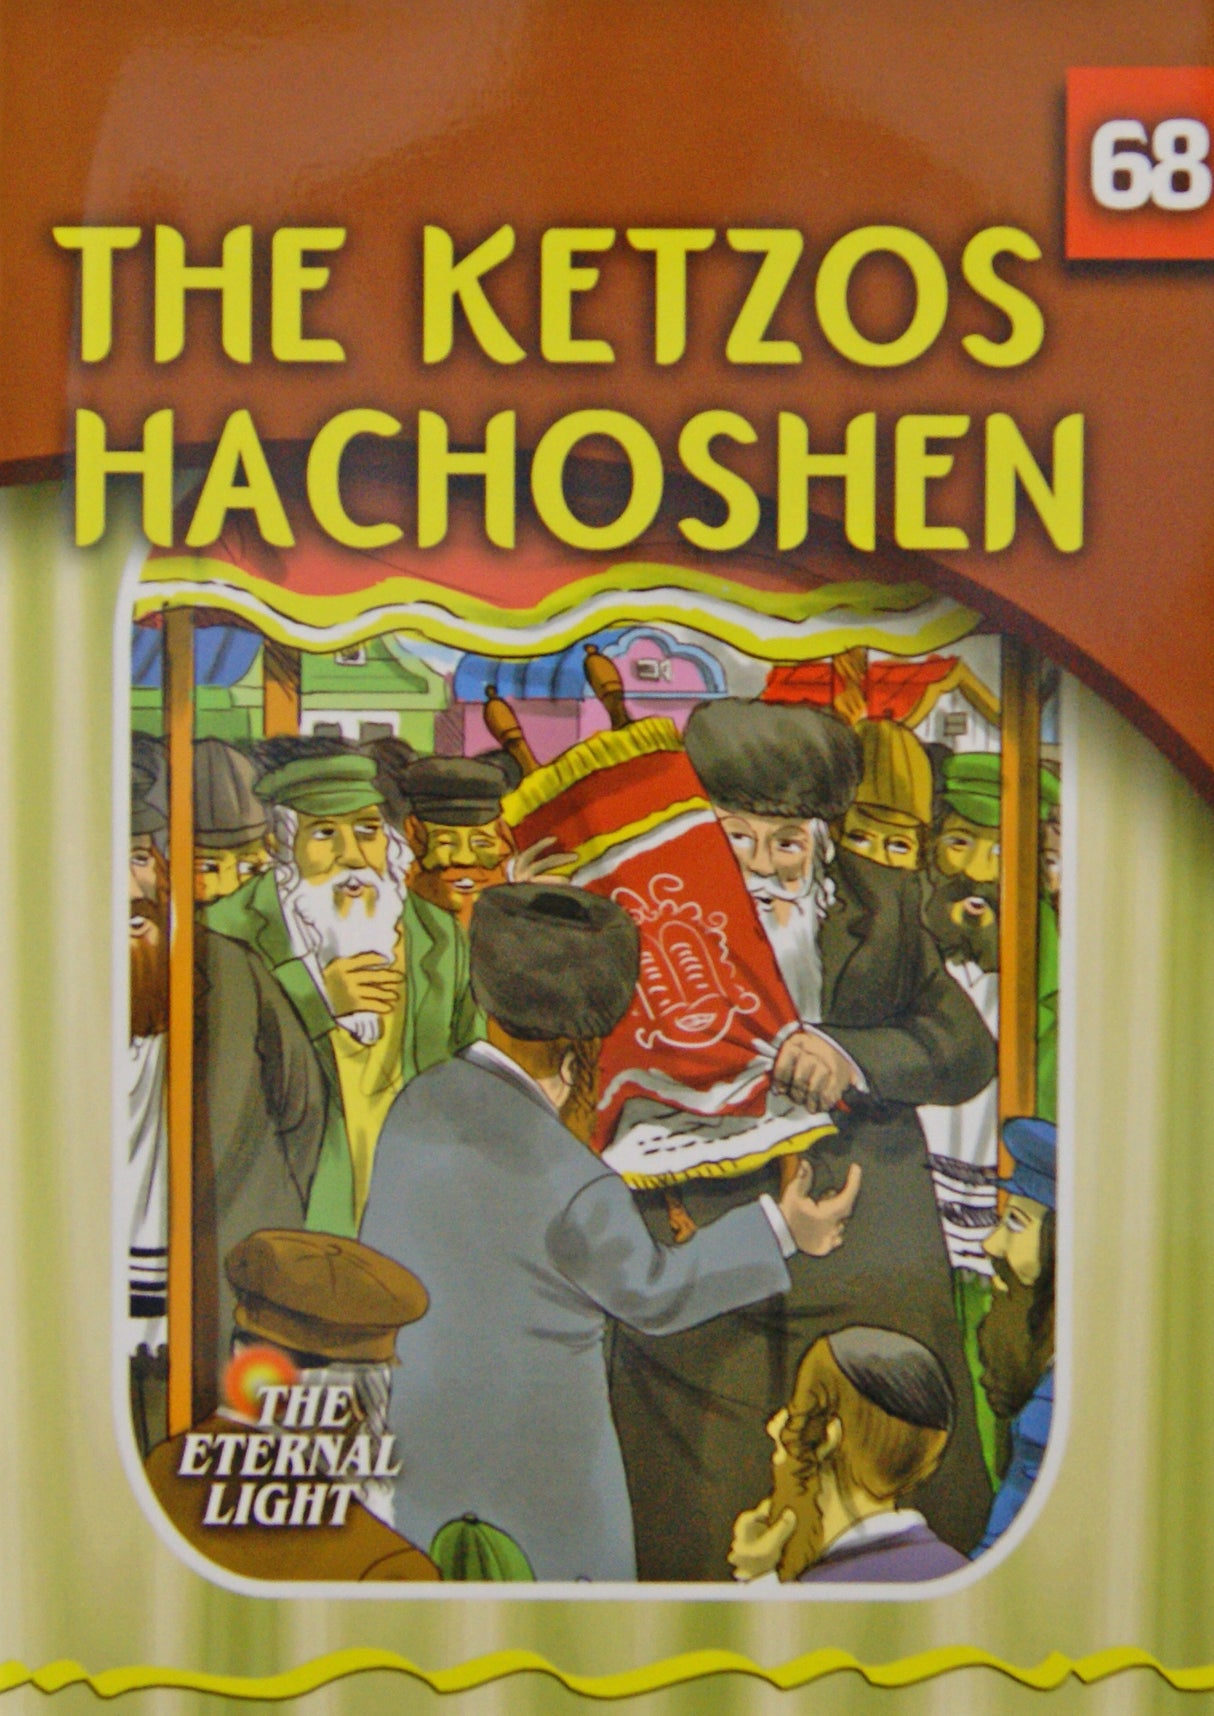 The Ketzos Hachoshen (Eternal Light Series 68)